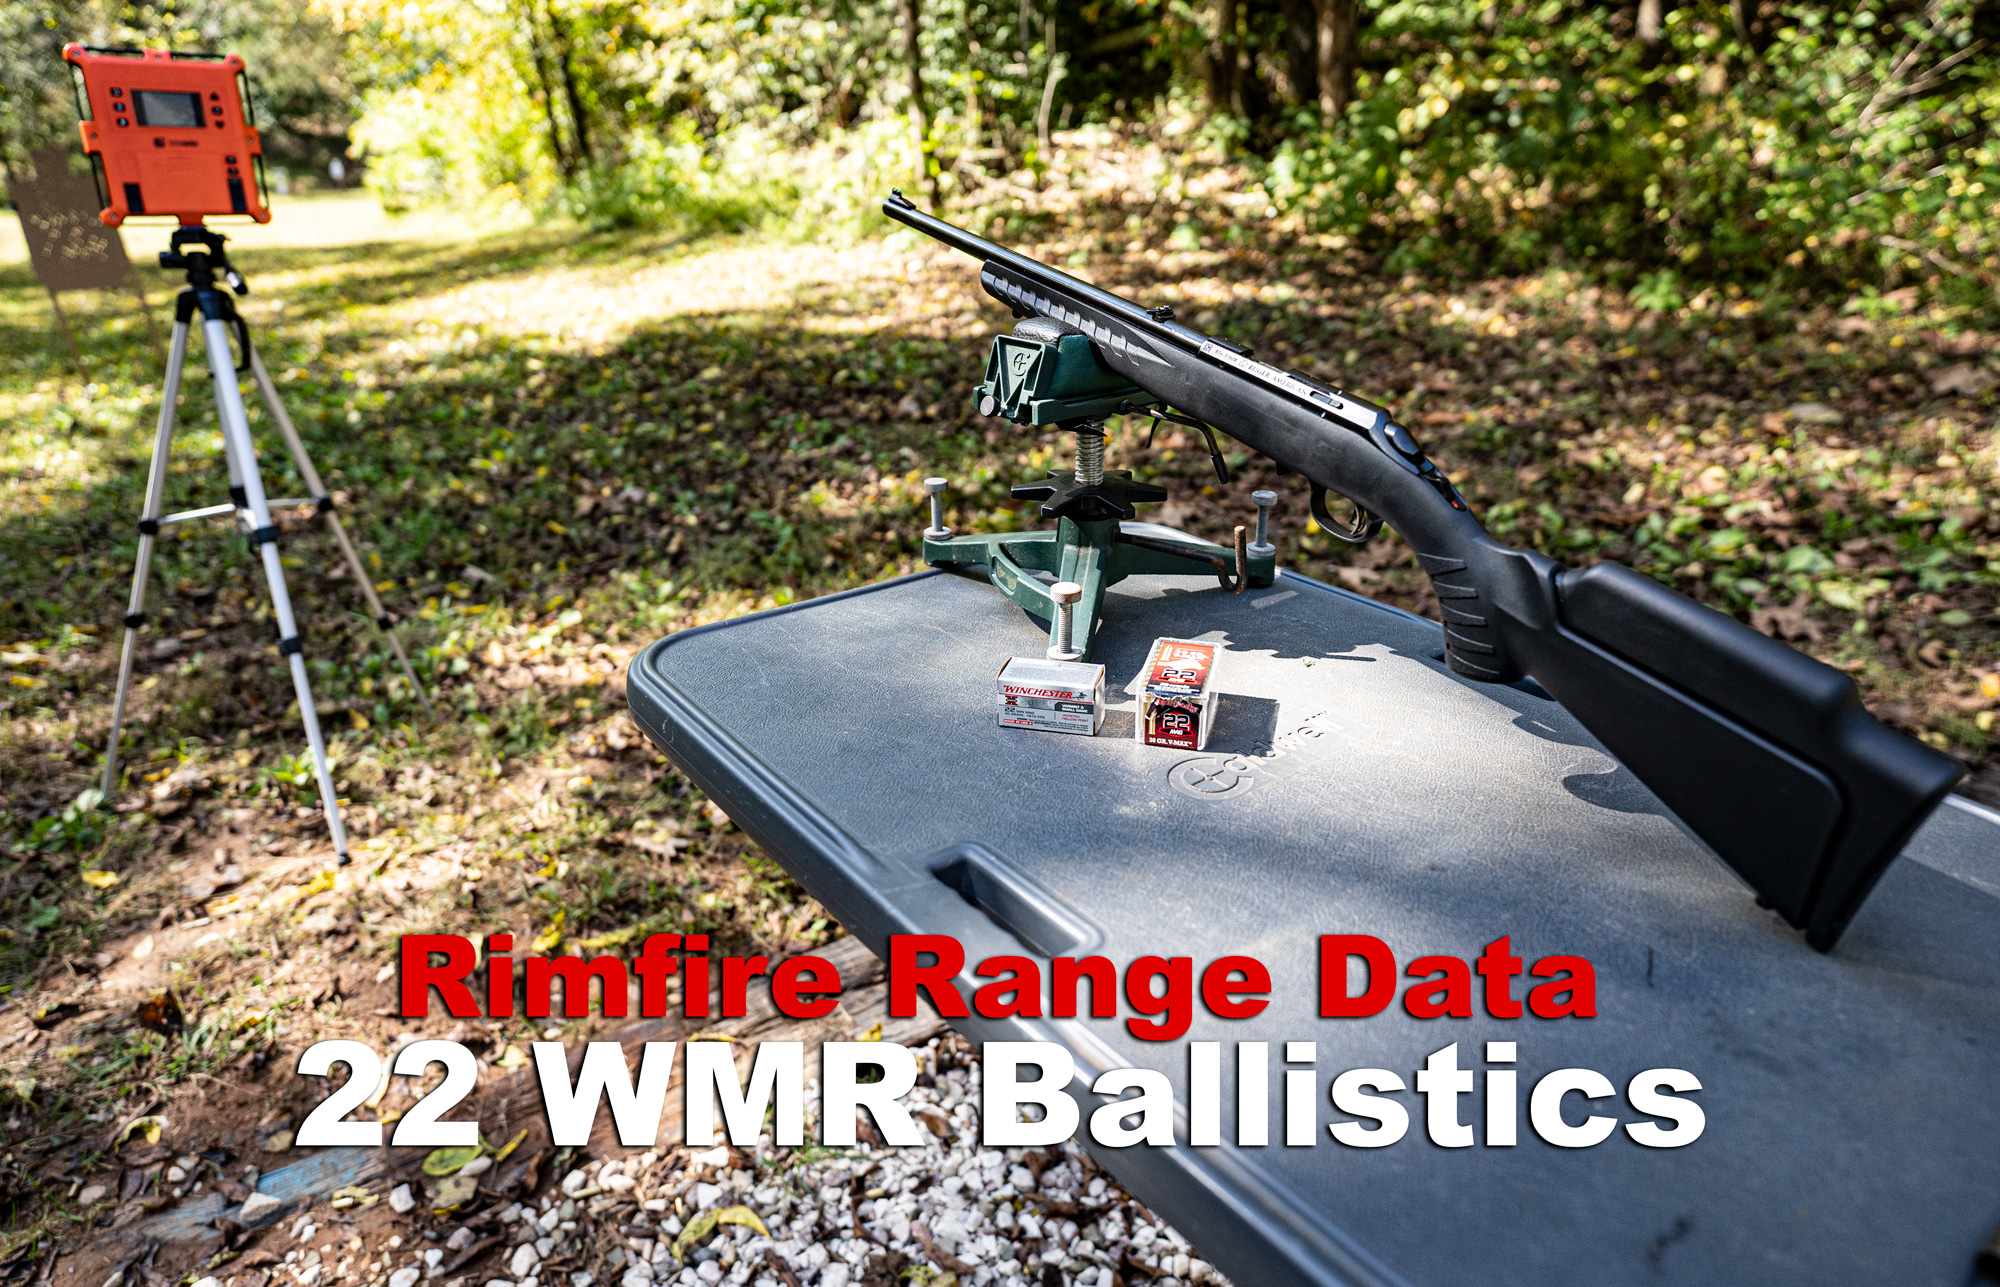 Measuring 22 WMR ballistics at the shooting range